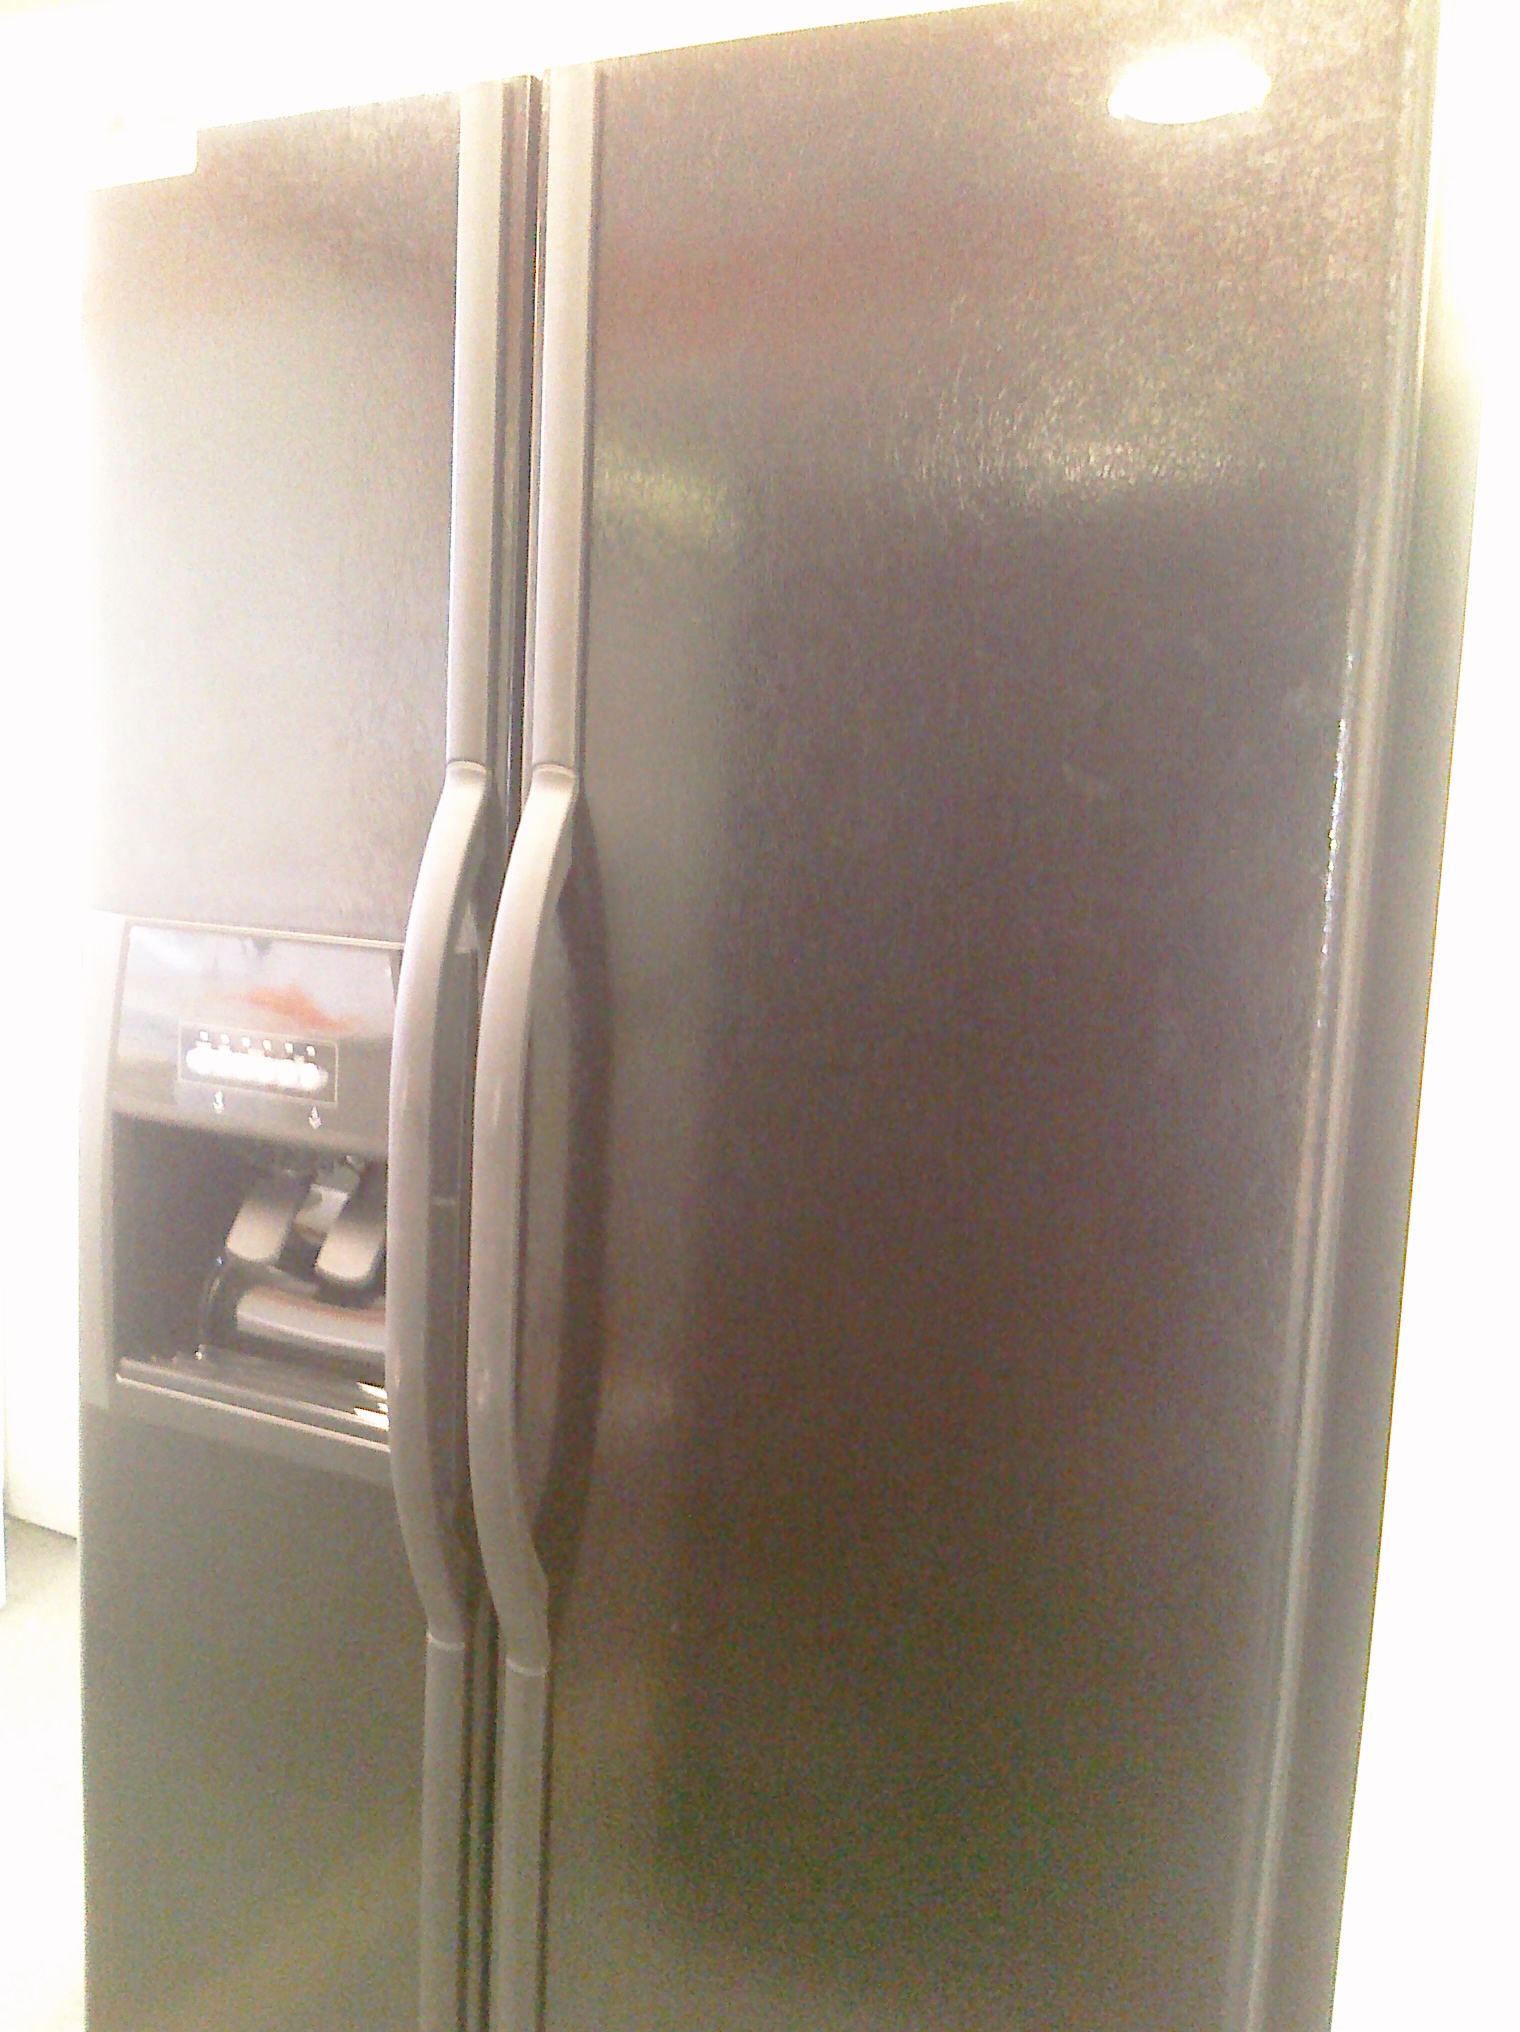 (9) Whirlpool ED5VHEXVB 25 Cubic Foot Energy Star Side-By-side Refrigerator, Black